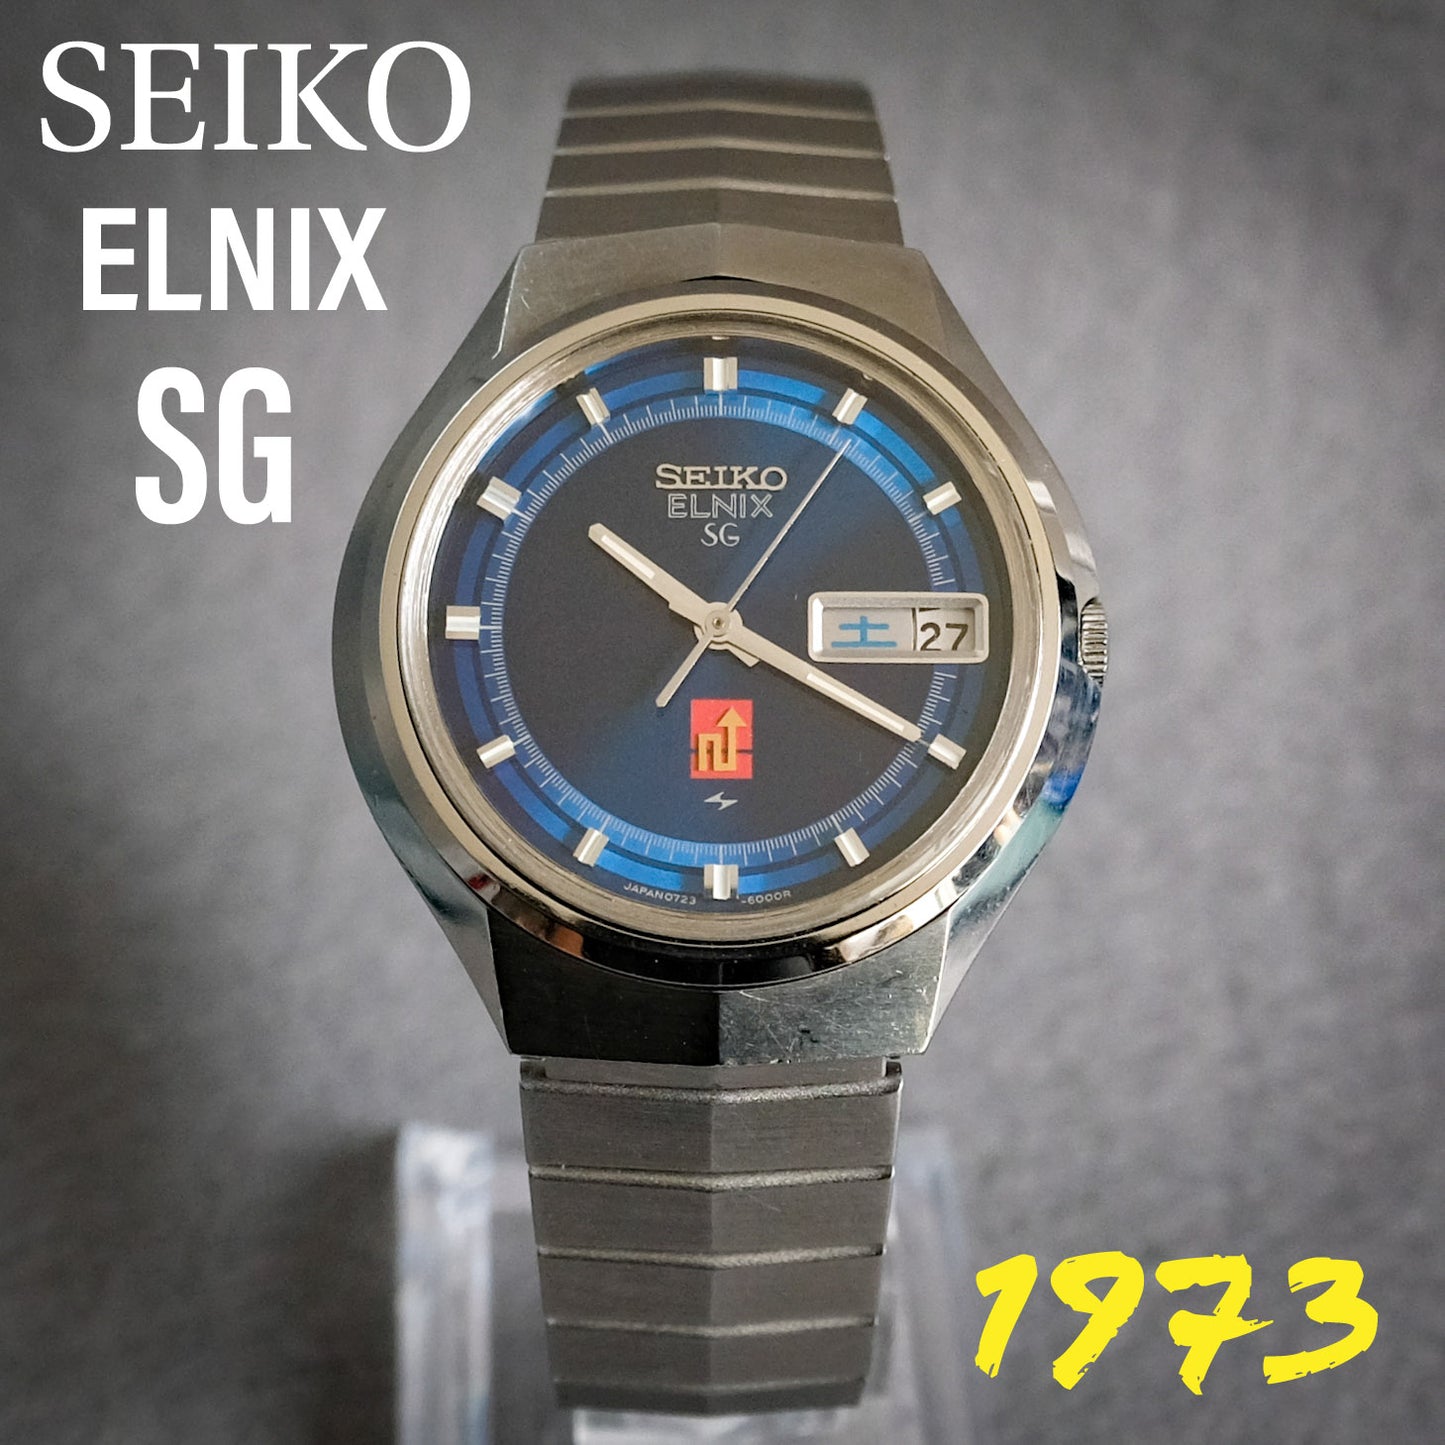 1973 Seiko Elnix 0723-6000